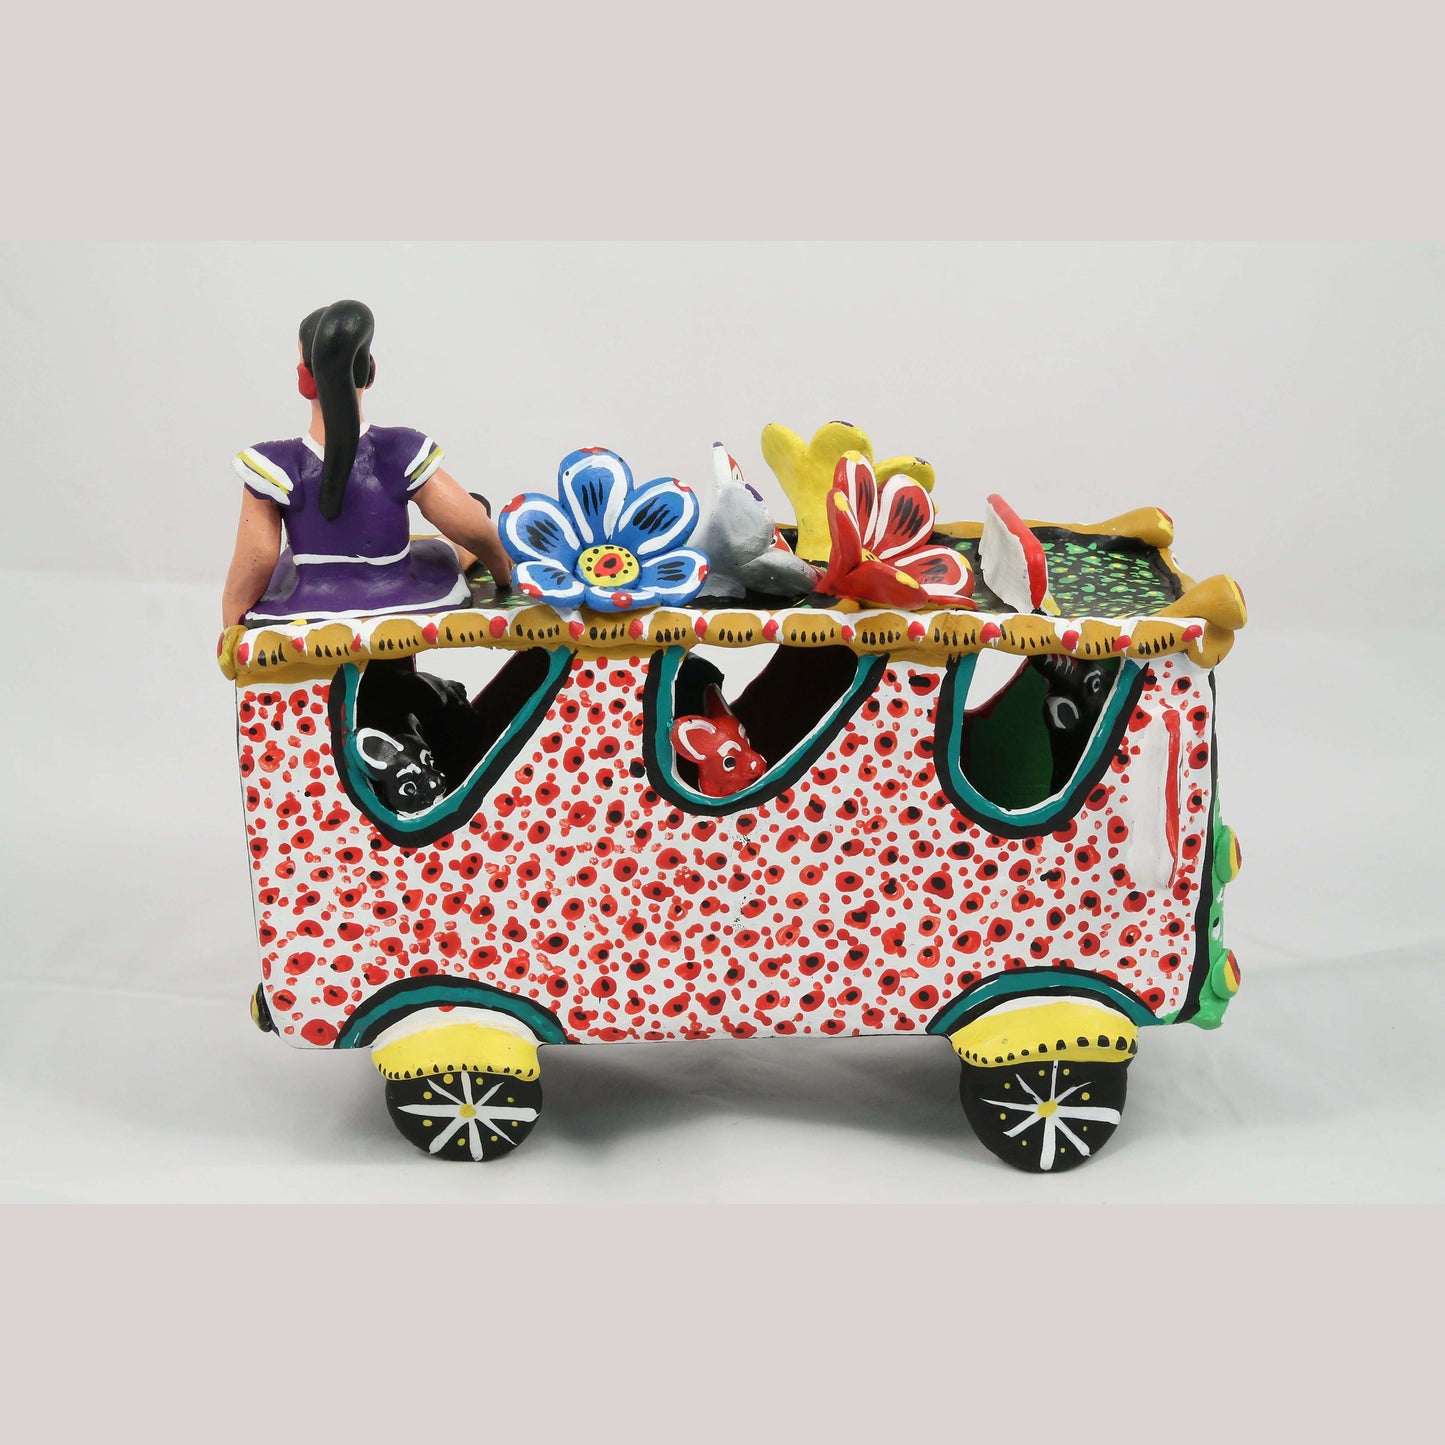 Ceramic Bus/Flowers/ Devil Figurines Mexico Folk Art Ocumicho Collectible Décor